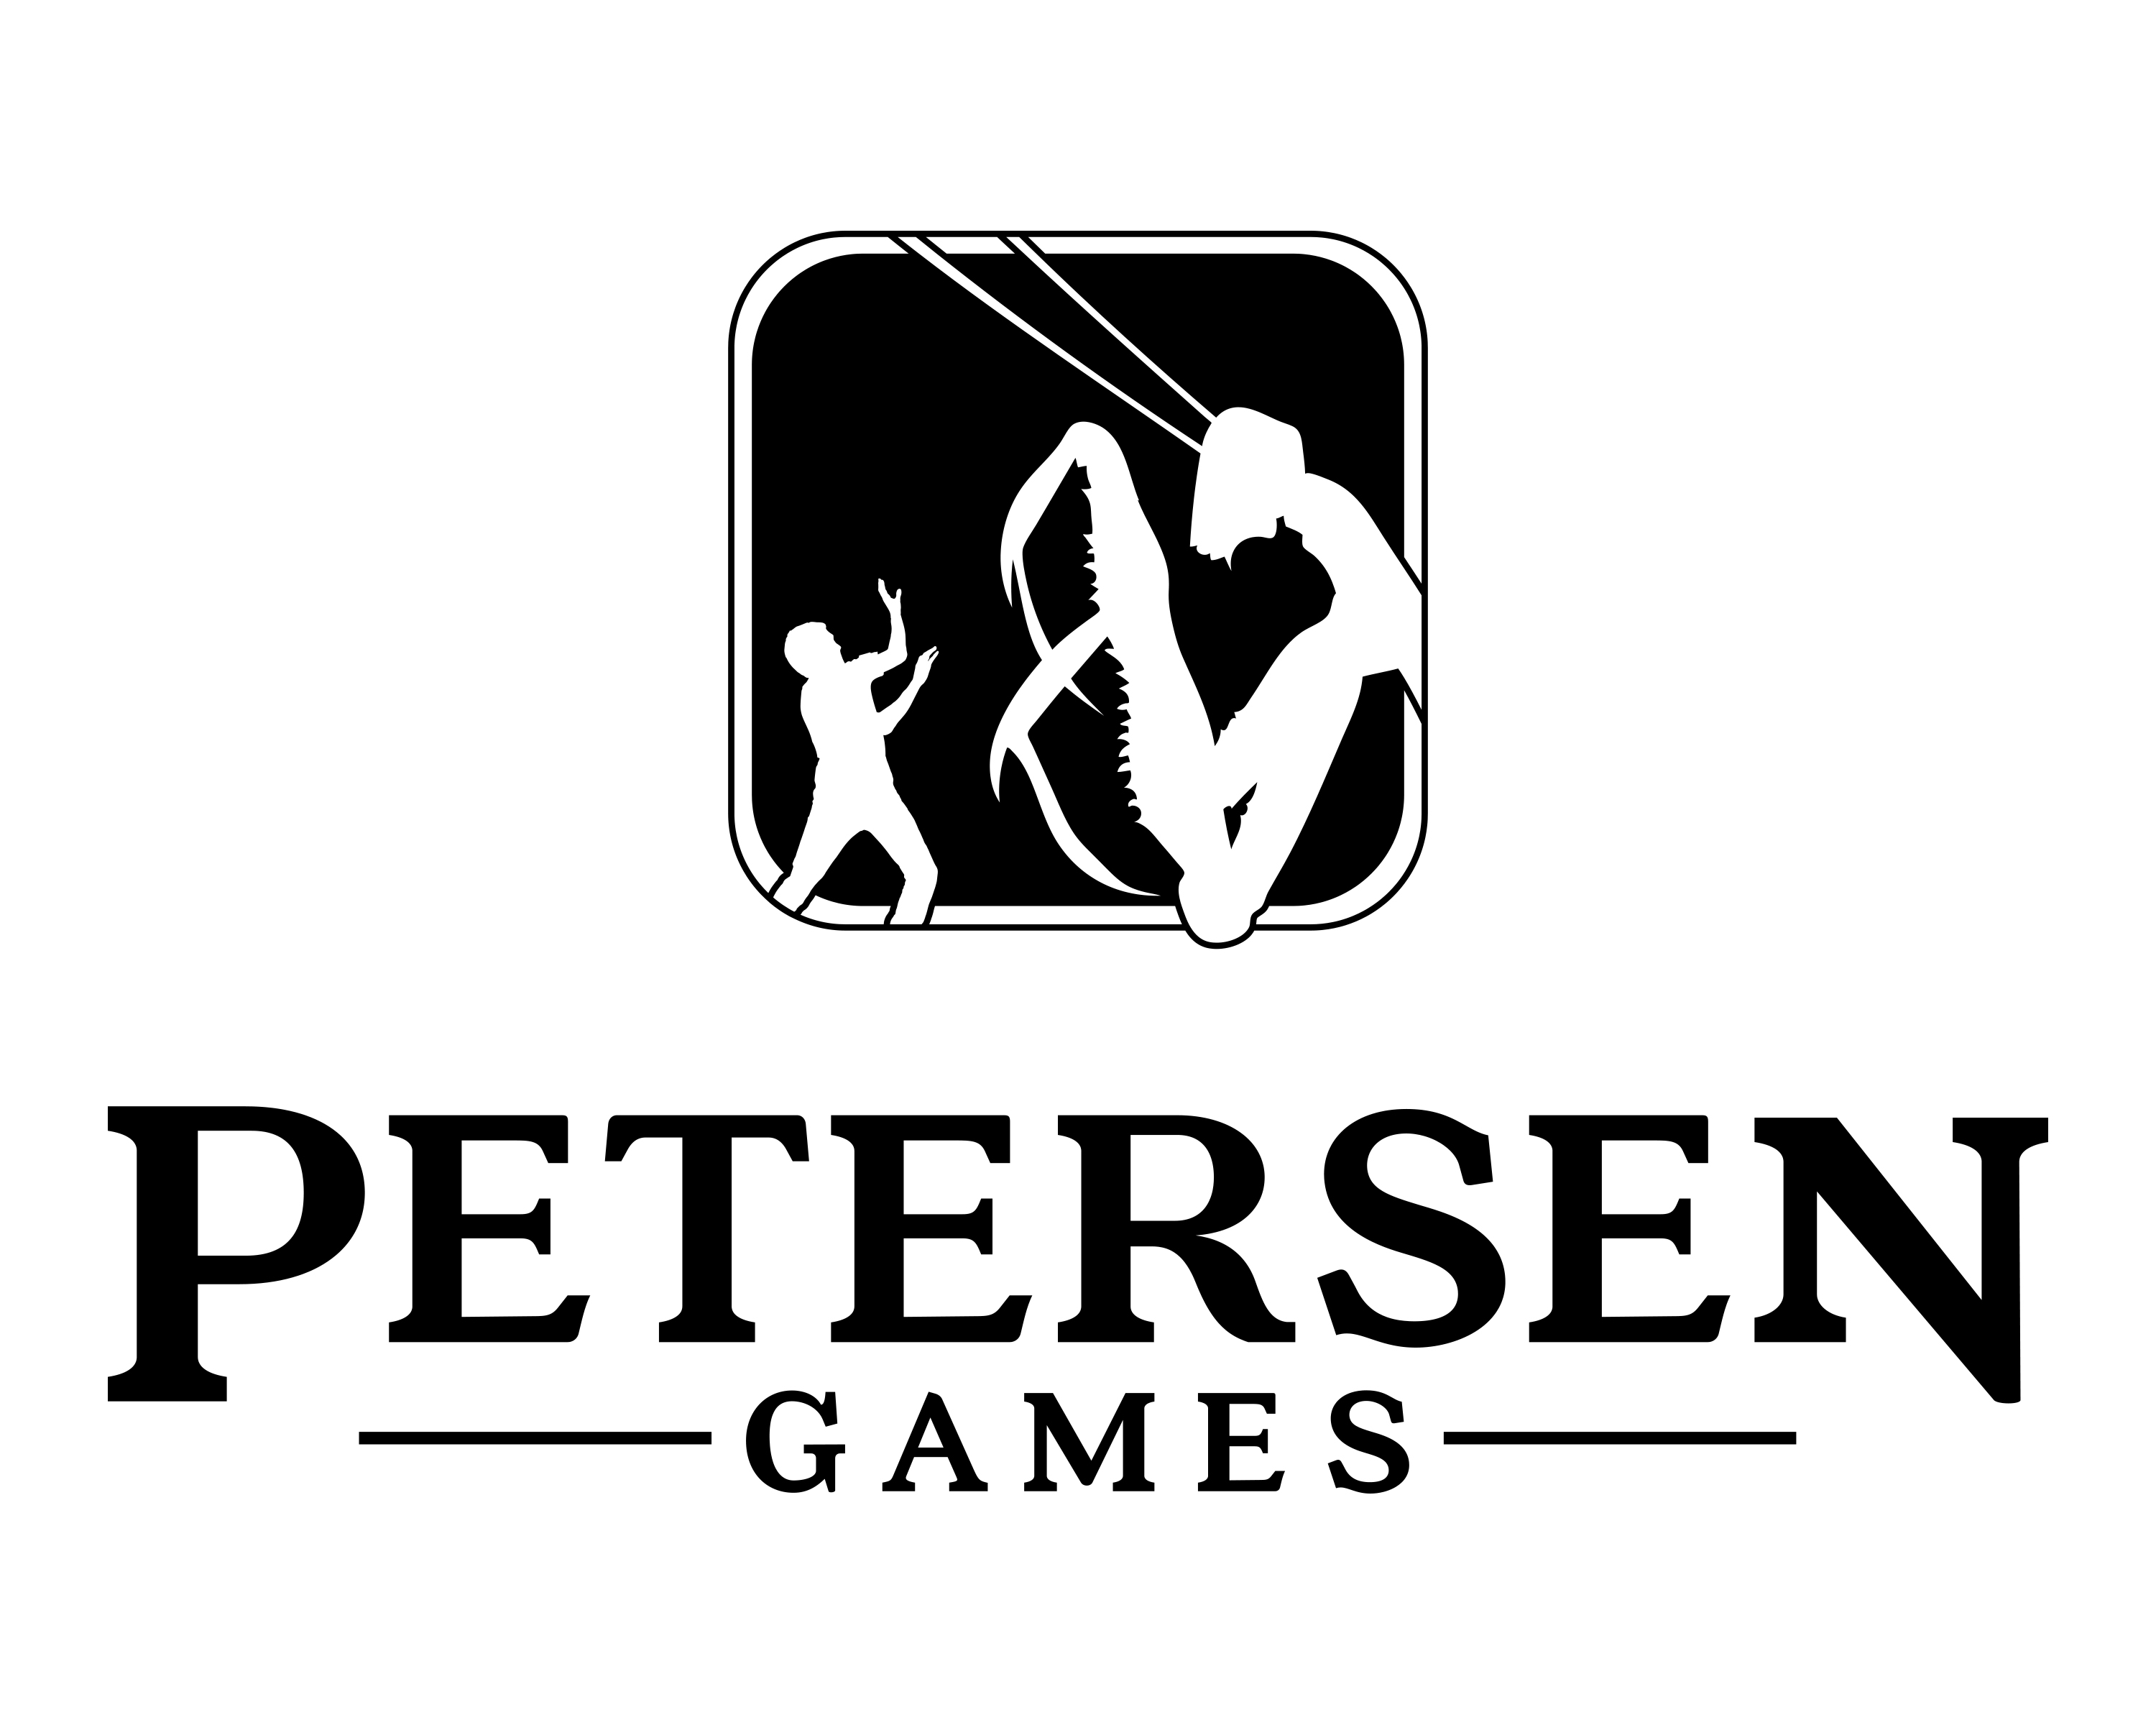 Petersen Games logo